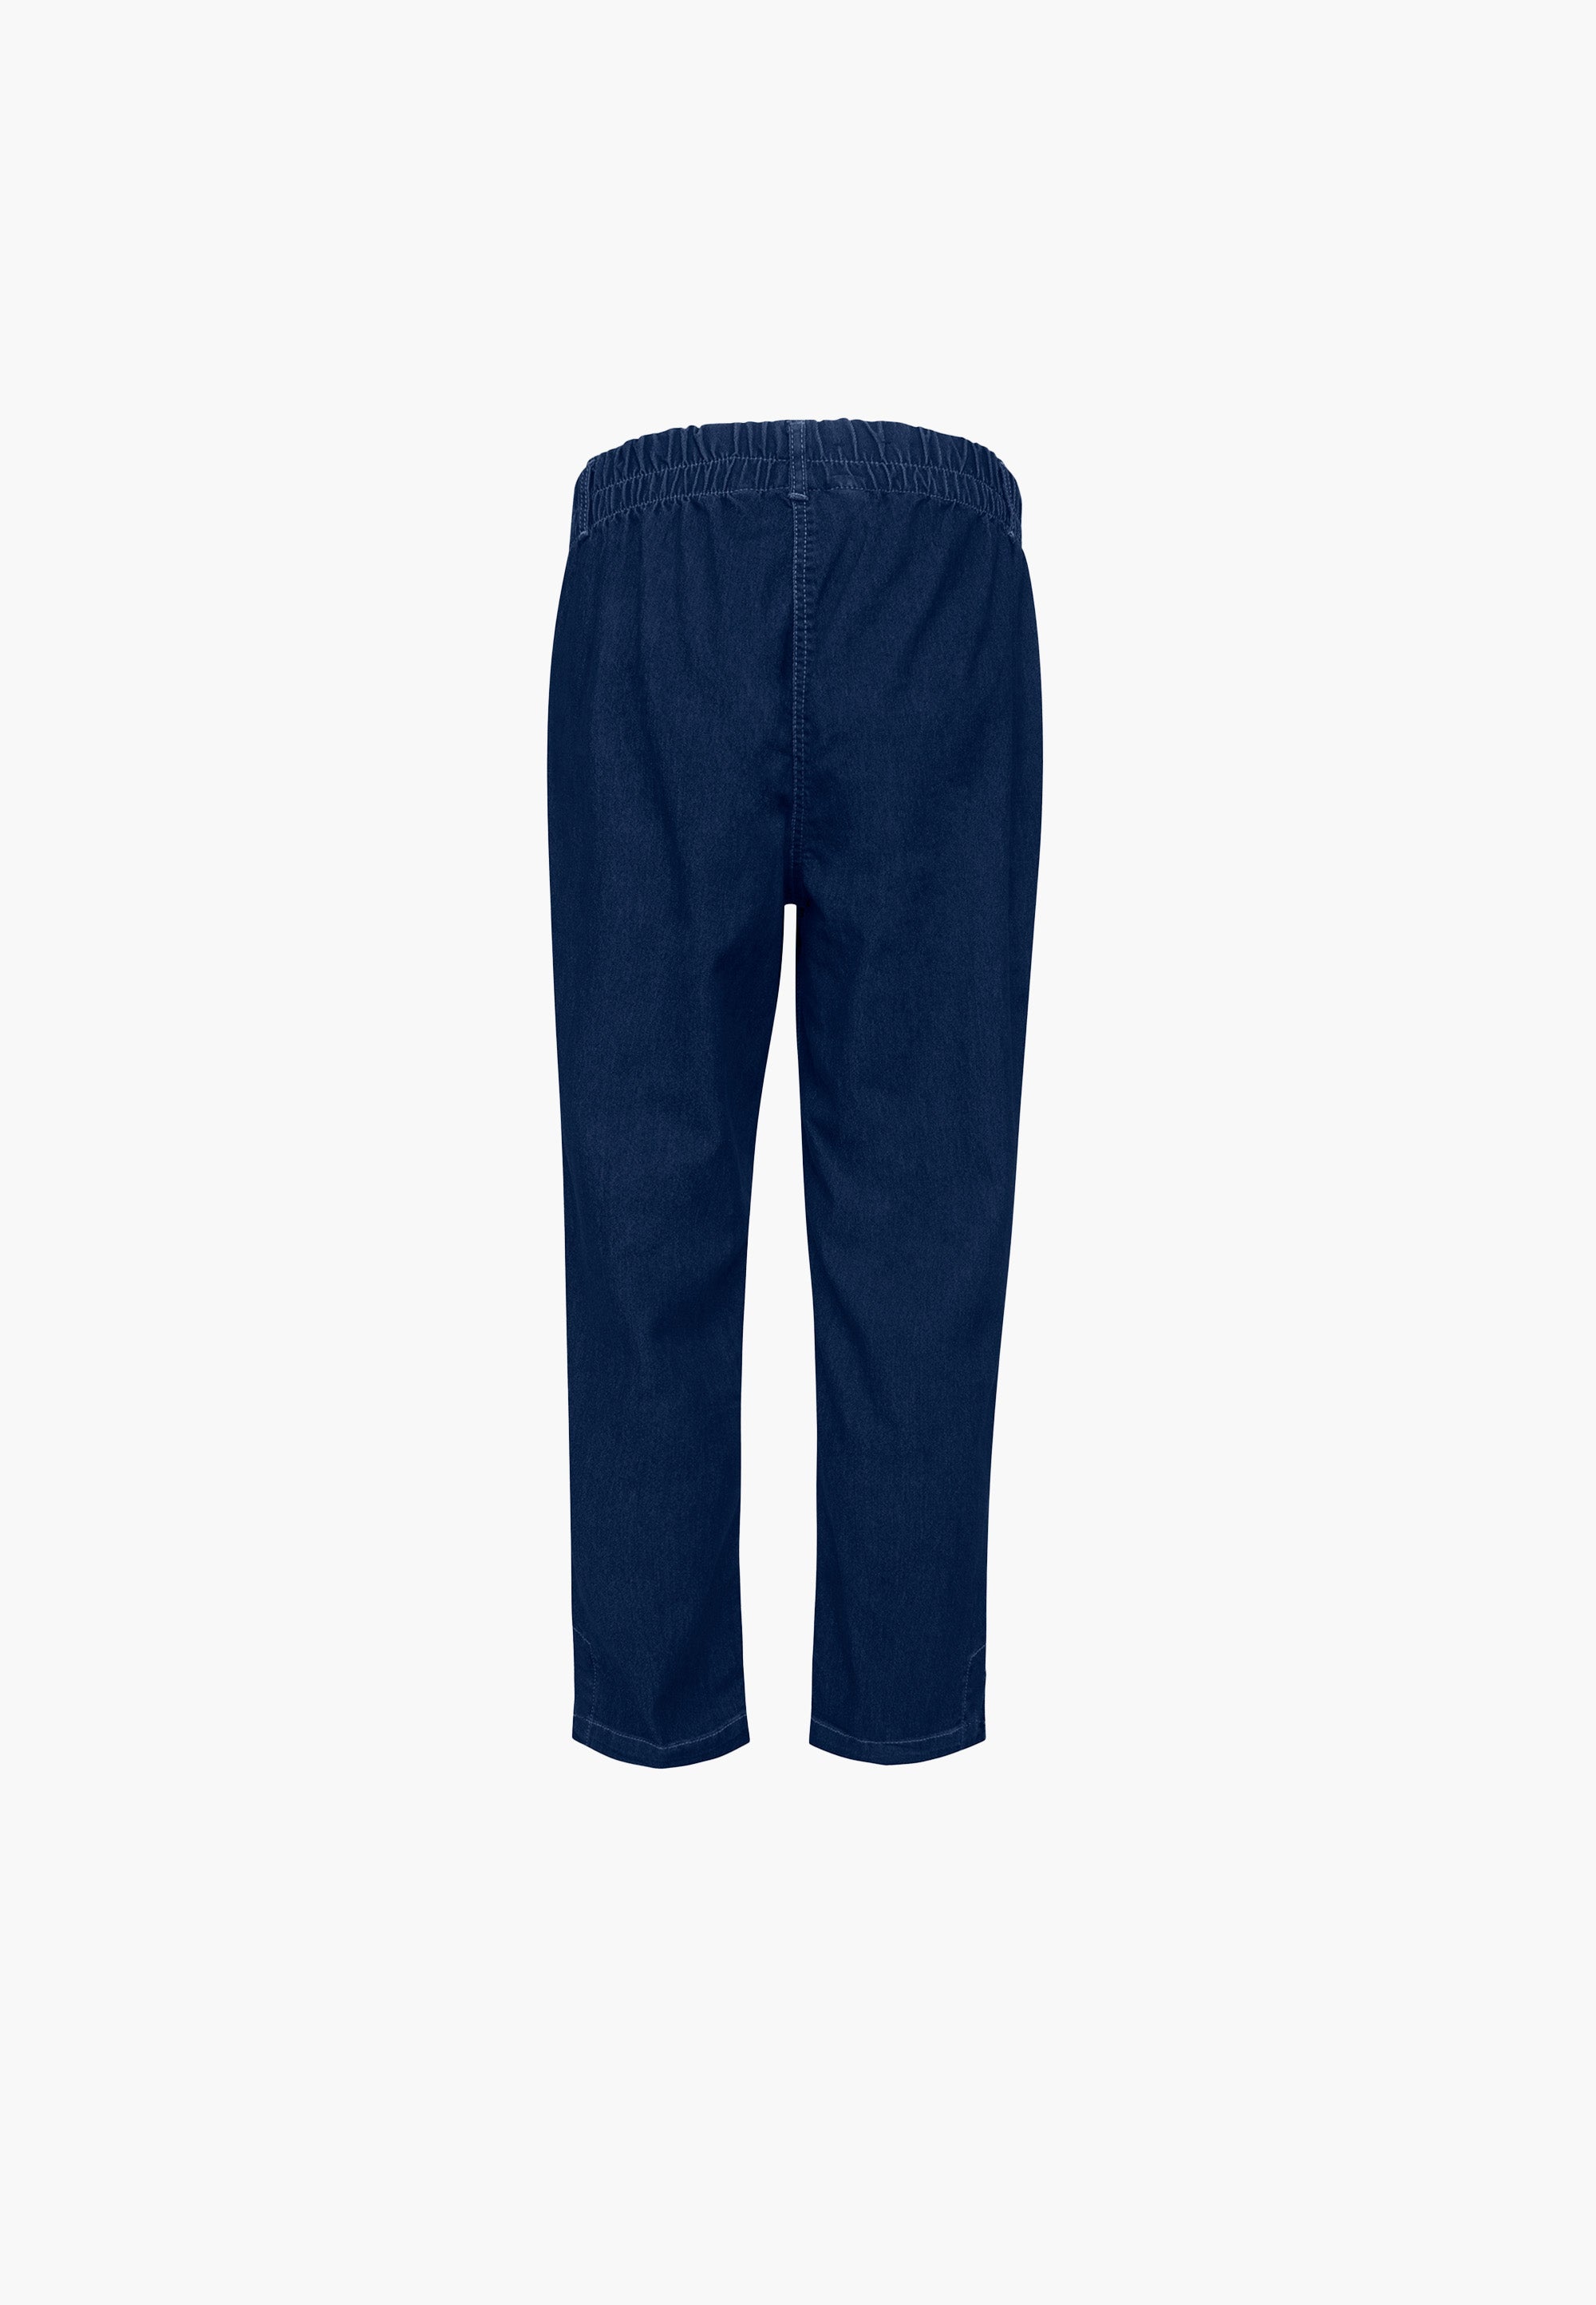 LAURIE  Ellie Relaxed - Short Length Trousers RELAXED 49501 Dark Blue Denim